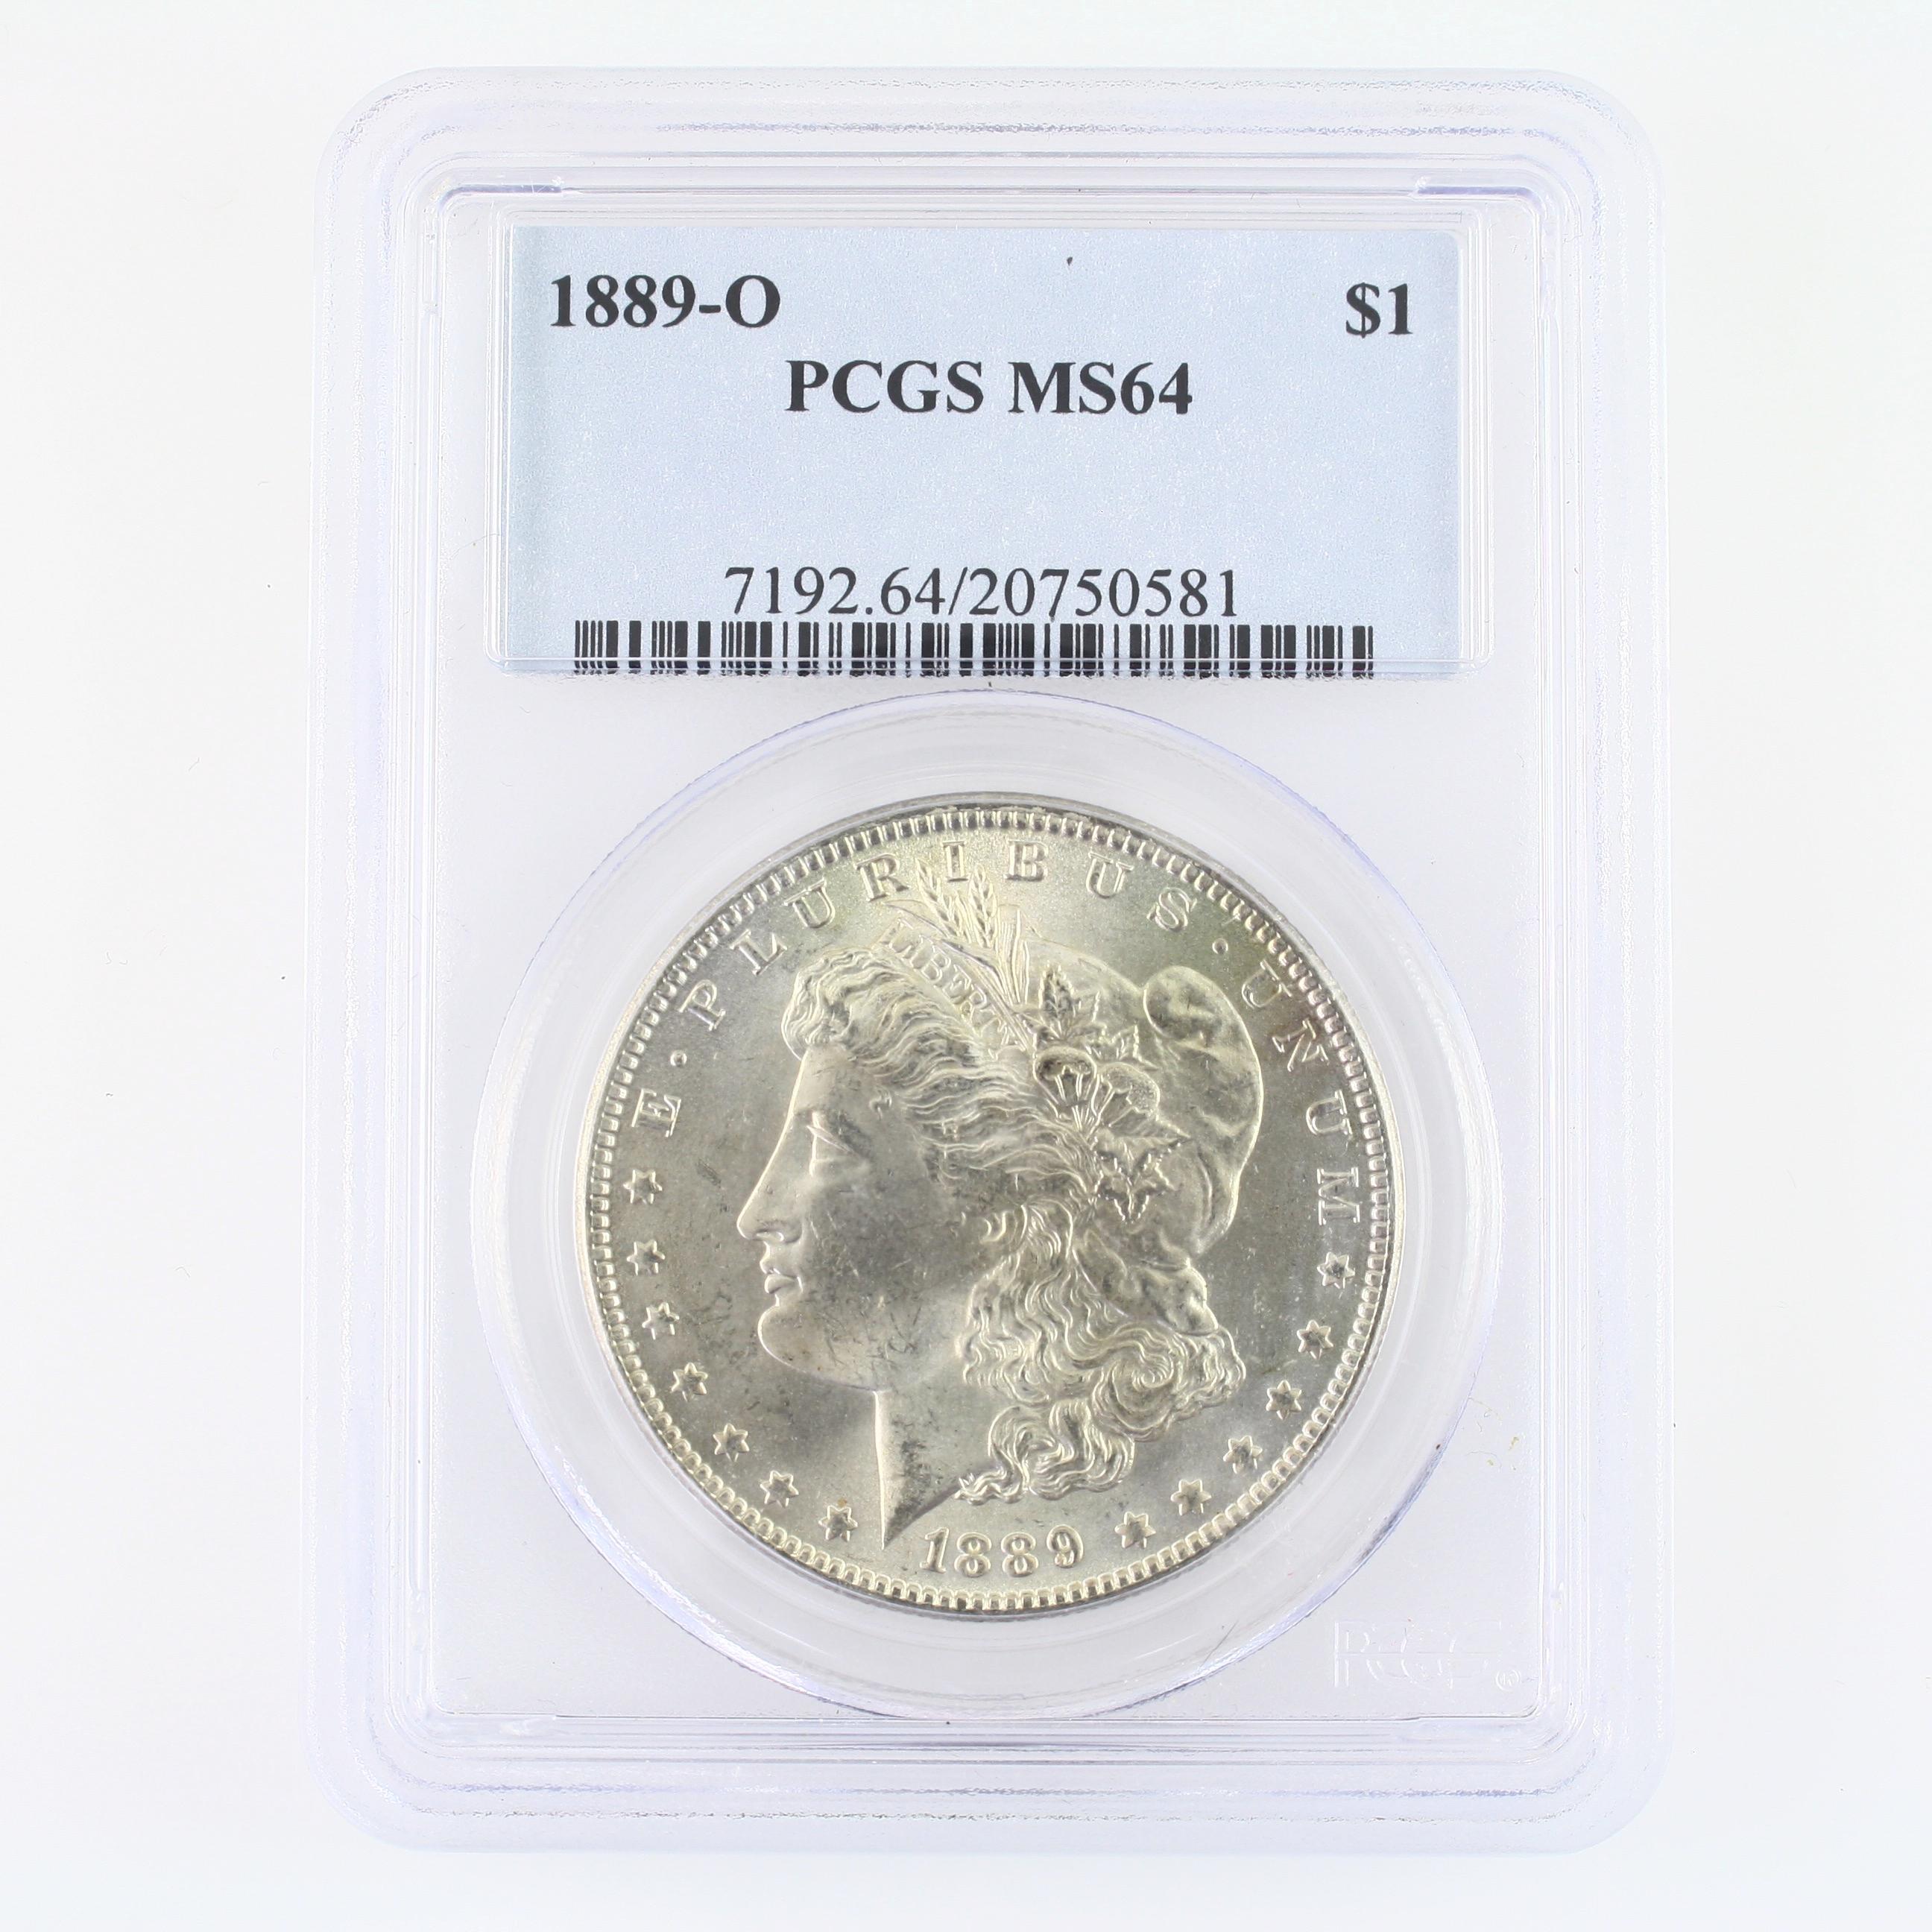 Certified 1889-O U.S. Morgan silver dollar